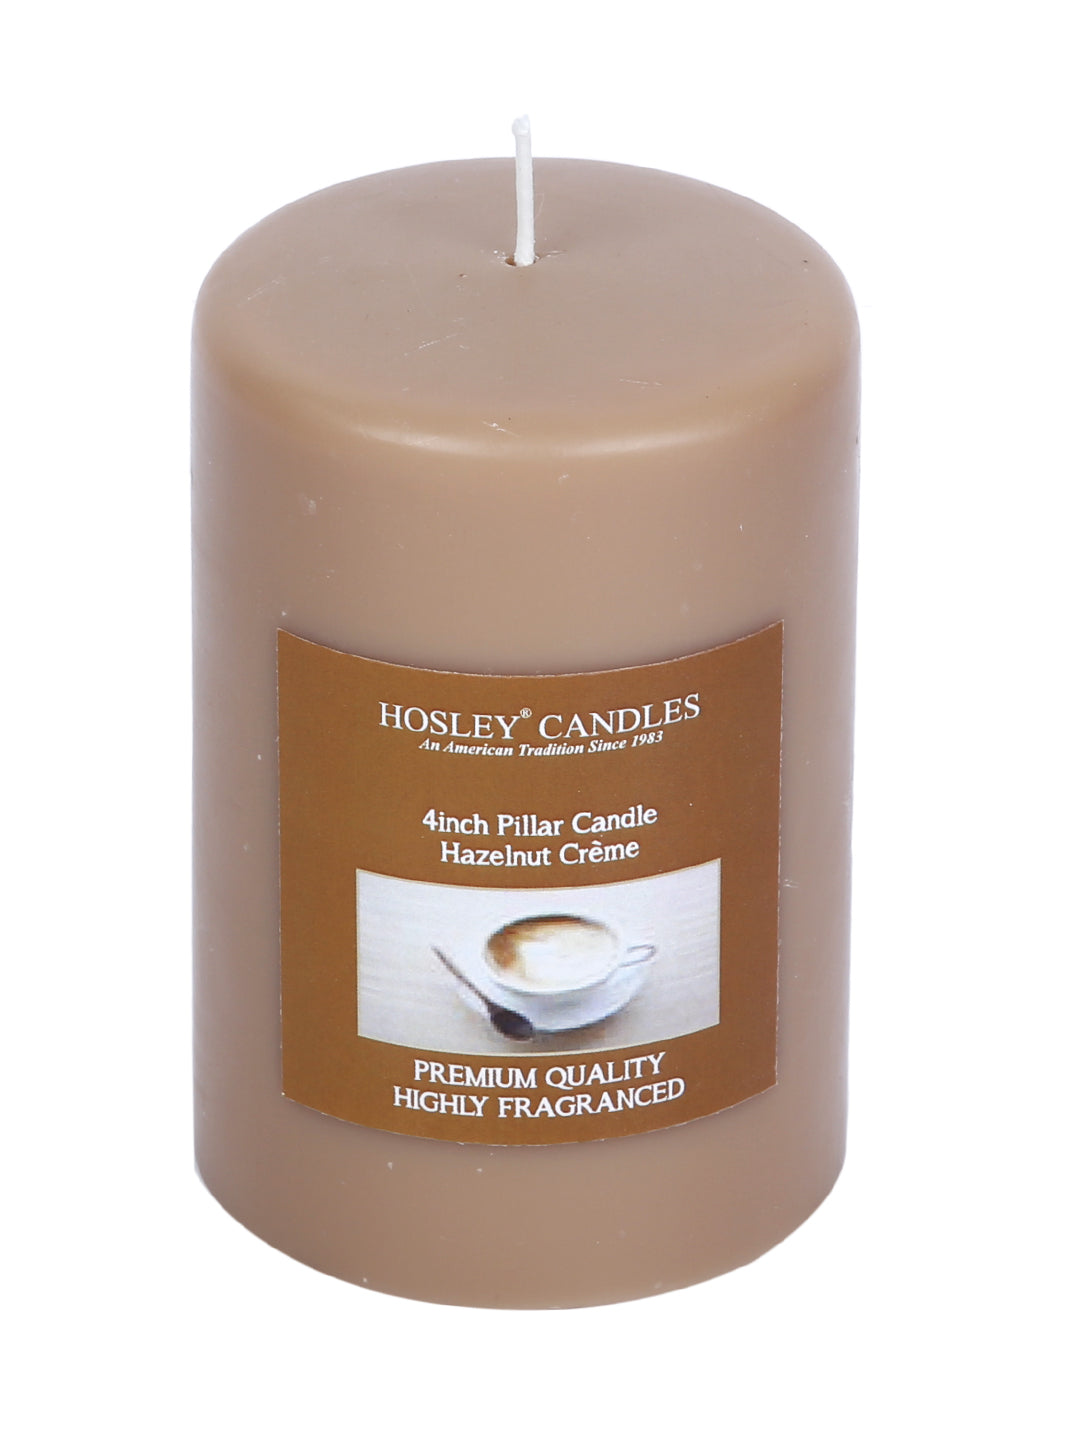 Hosley® Hazelnut Creme Highly Fragranced 4inch Pillar Candle